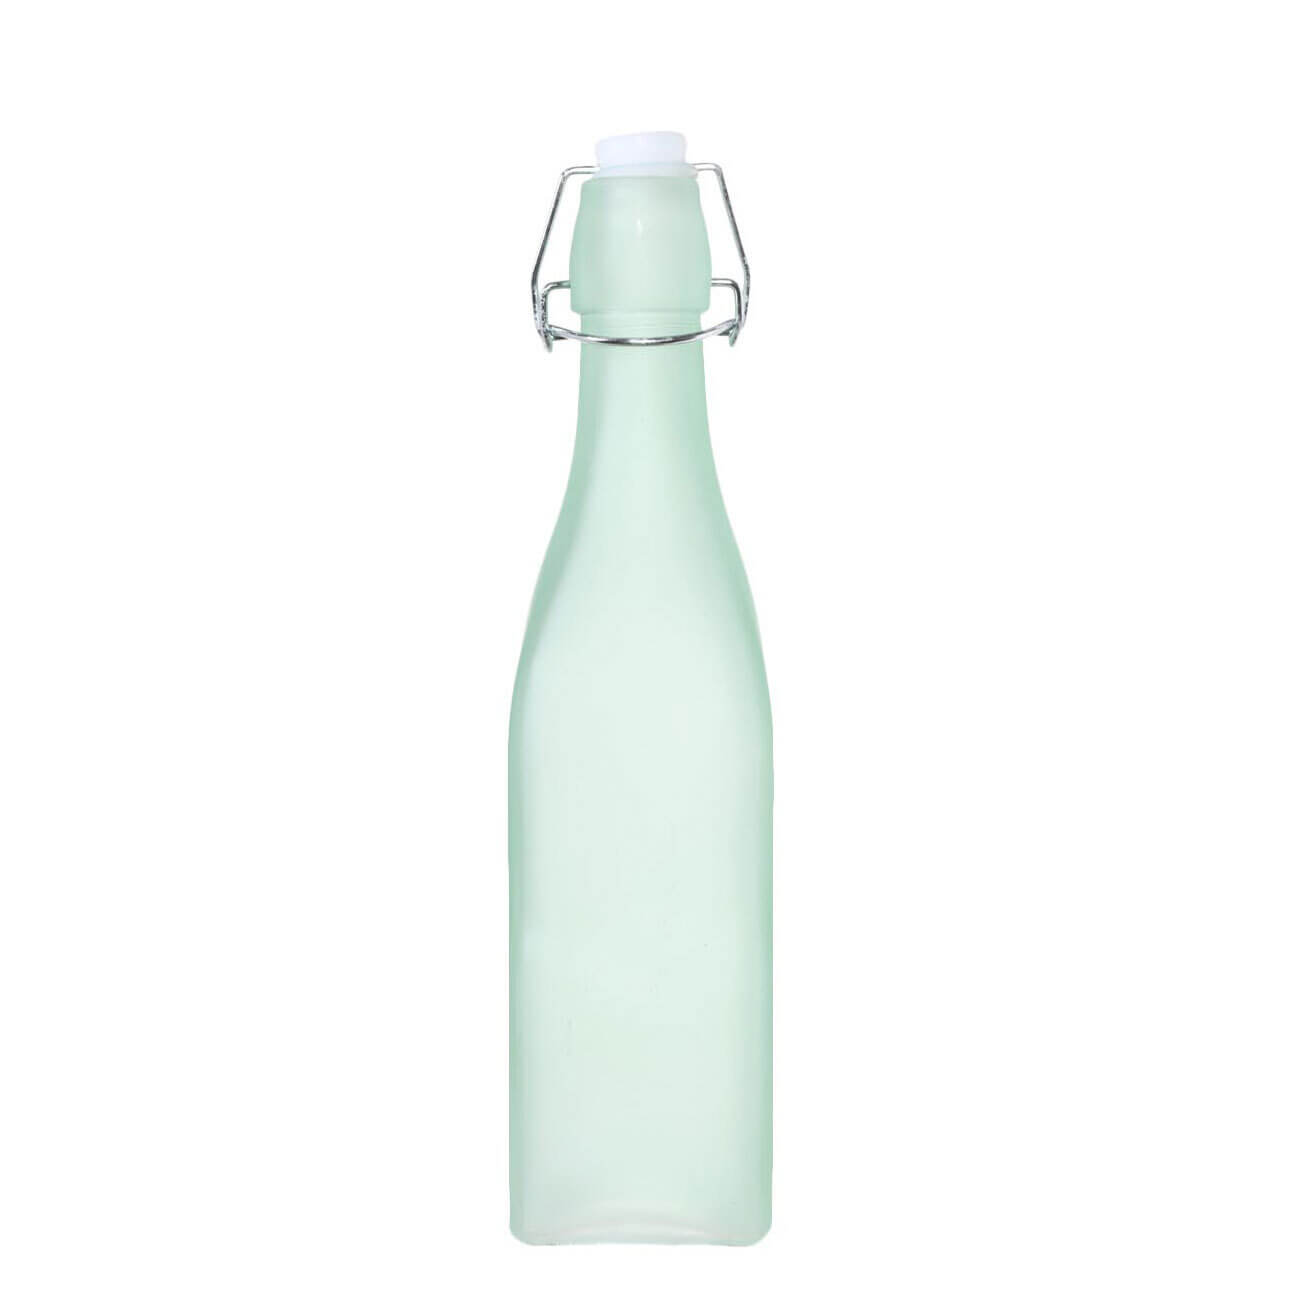 Бутылка для масла или уксуса, 500 мл, с клипсой, стекло/металл, зеленая, Light kitchen